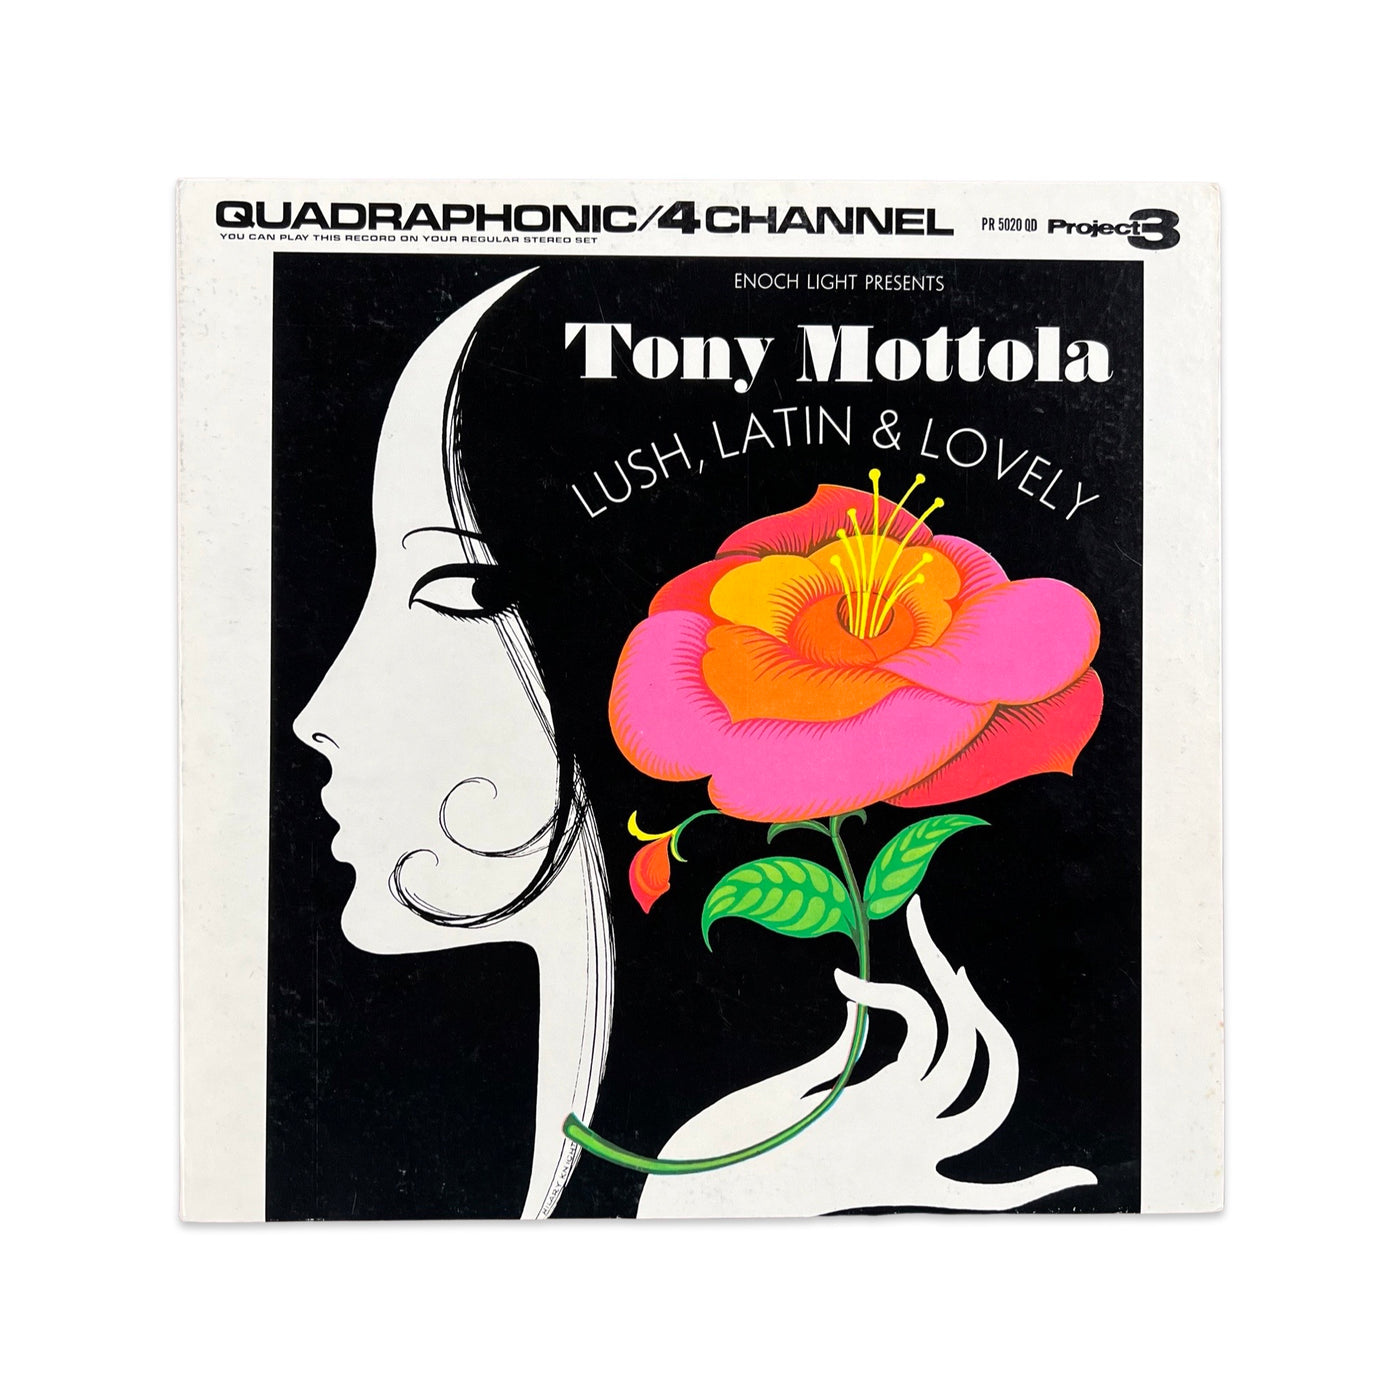 Tony Mottola - Lush, Latin & Lovely